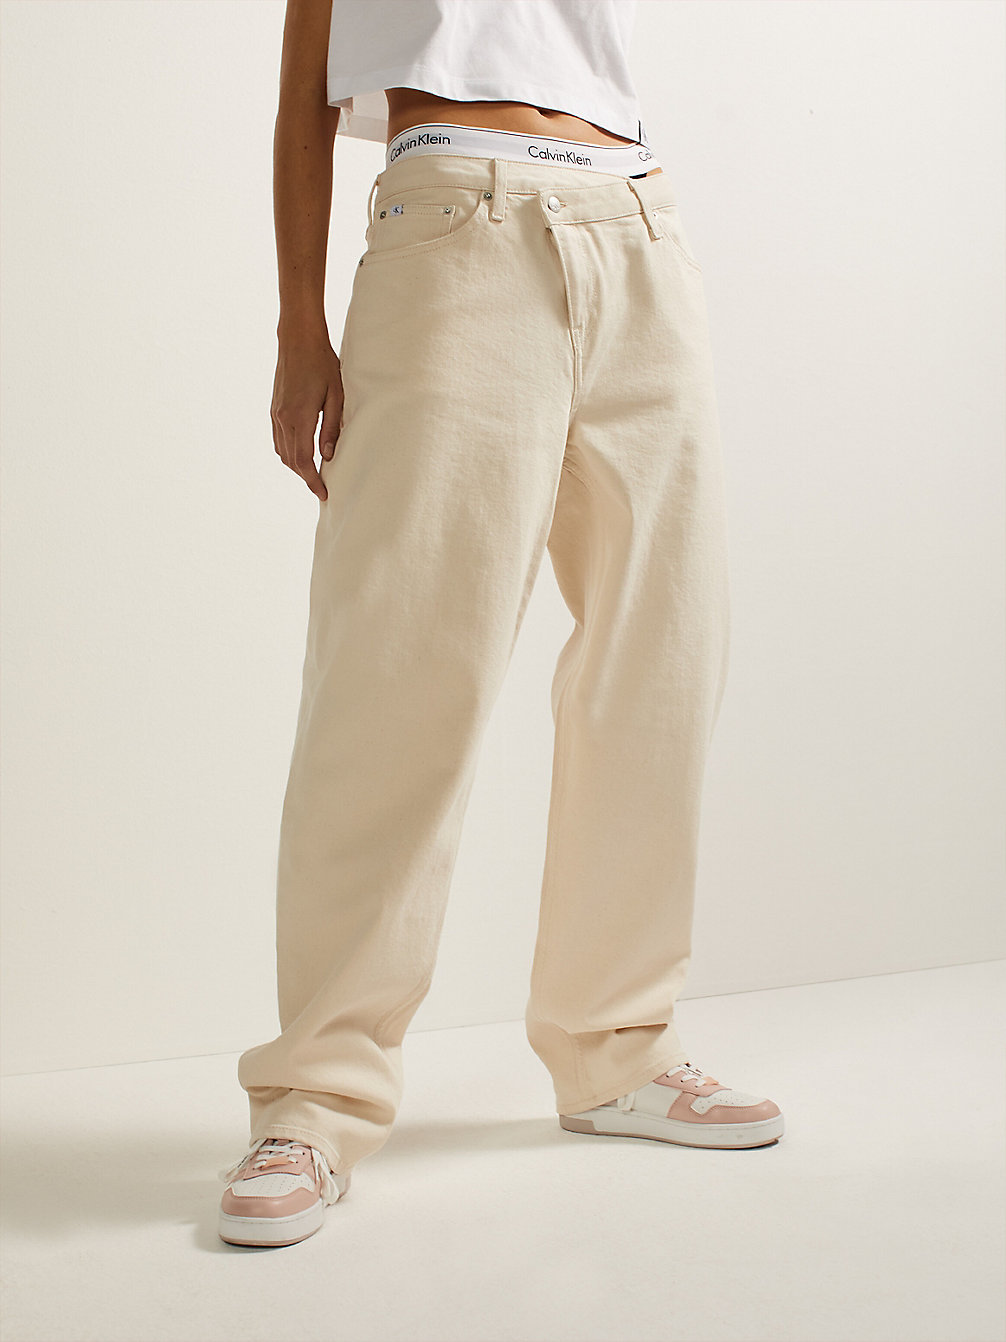 CRESCENT MOON 90's Straight Jeans undefined women Calvin Klein